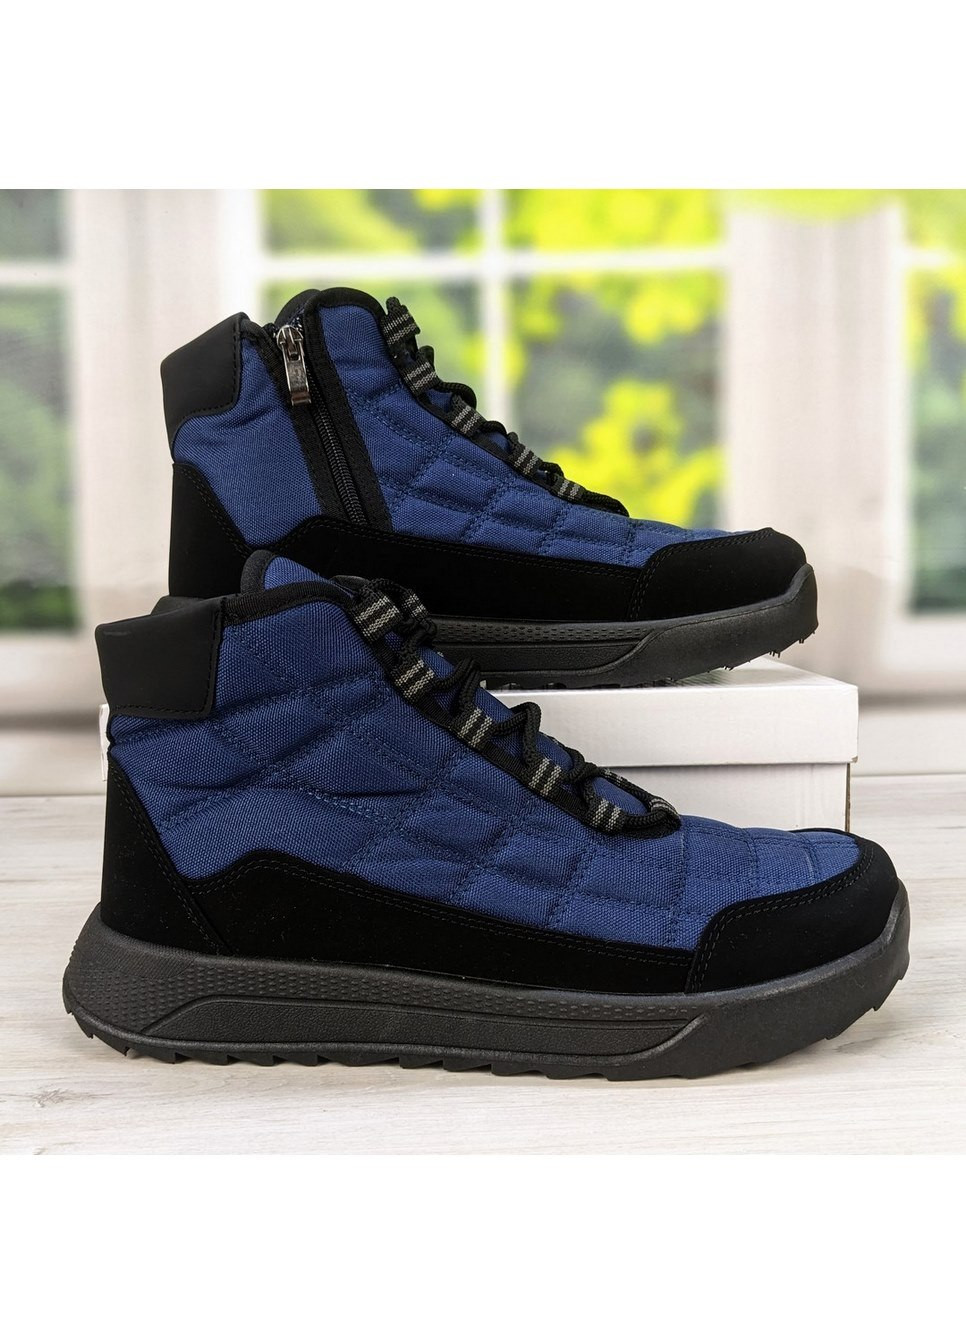 Синие зимние ботинки мужские дутики зимние на шнурках Progress